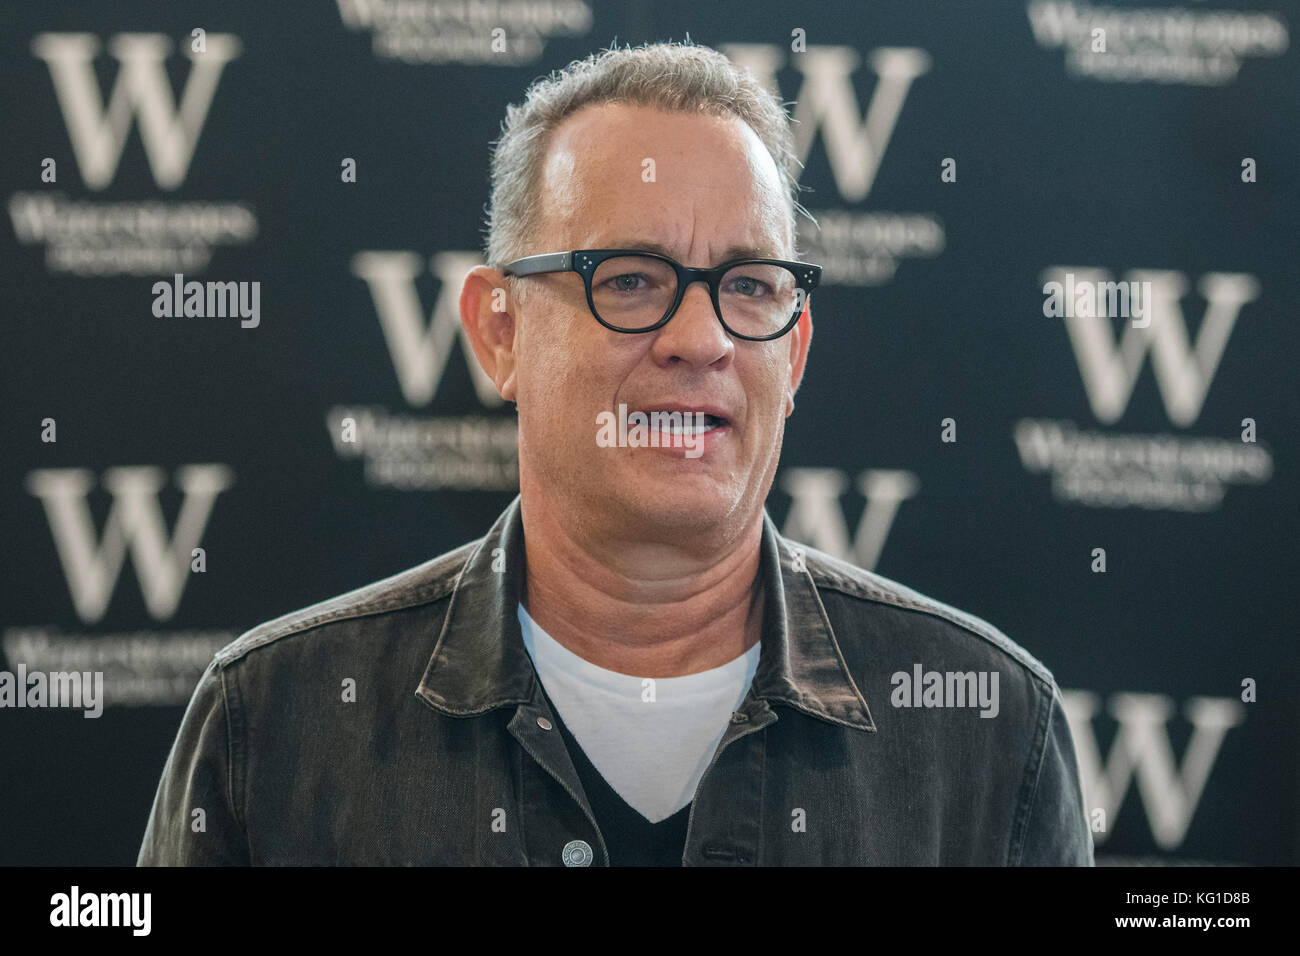 Londra, Regno Unito. 2° Nov, 2017. Tom Hanks segni il suo nuovo Random House Prenota raro tipo a Waterstones Piccadilly. Londra 02 Nov 2017 Credit: Guy Bell/Alamy Live News Foto Stock